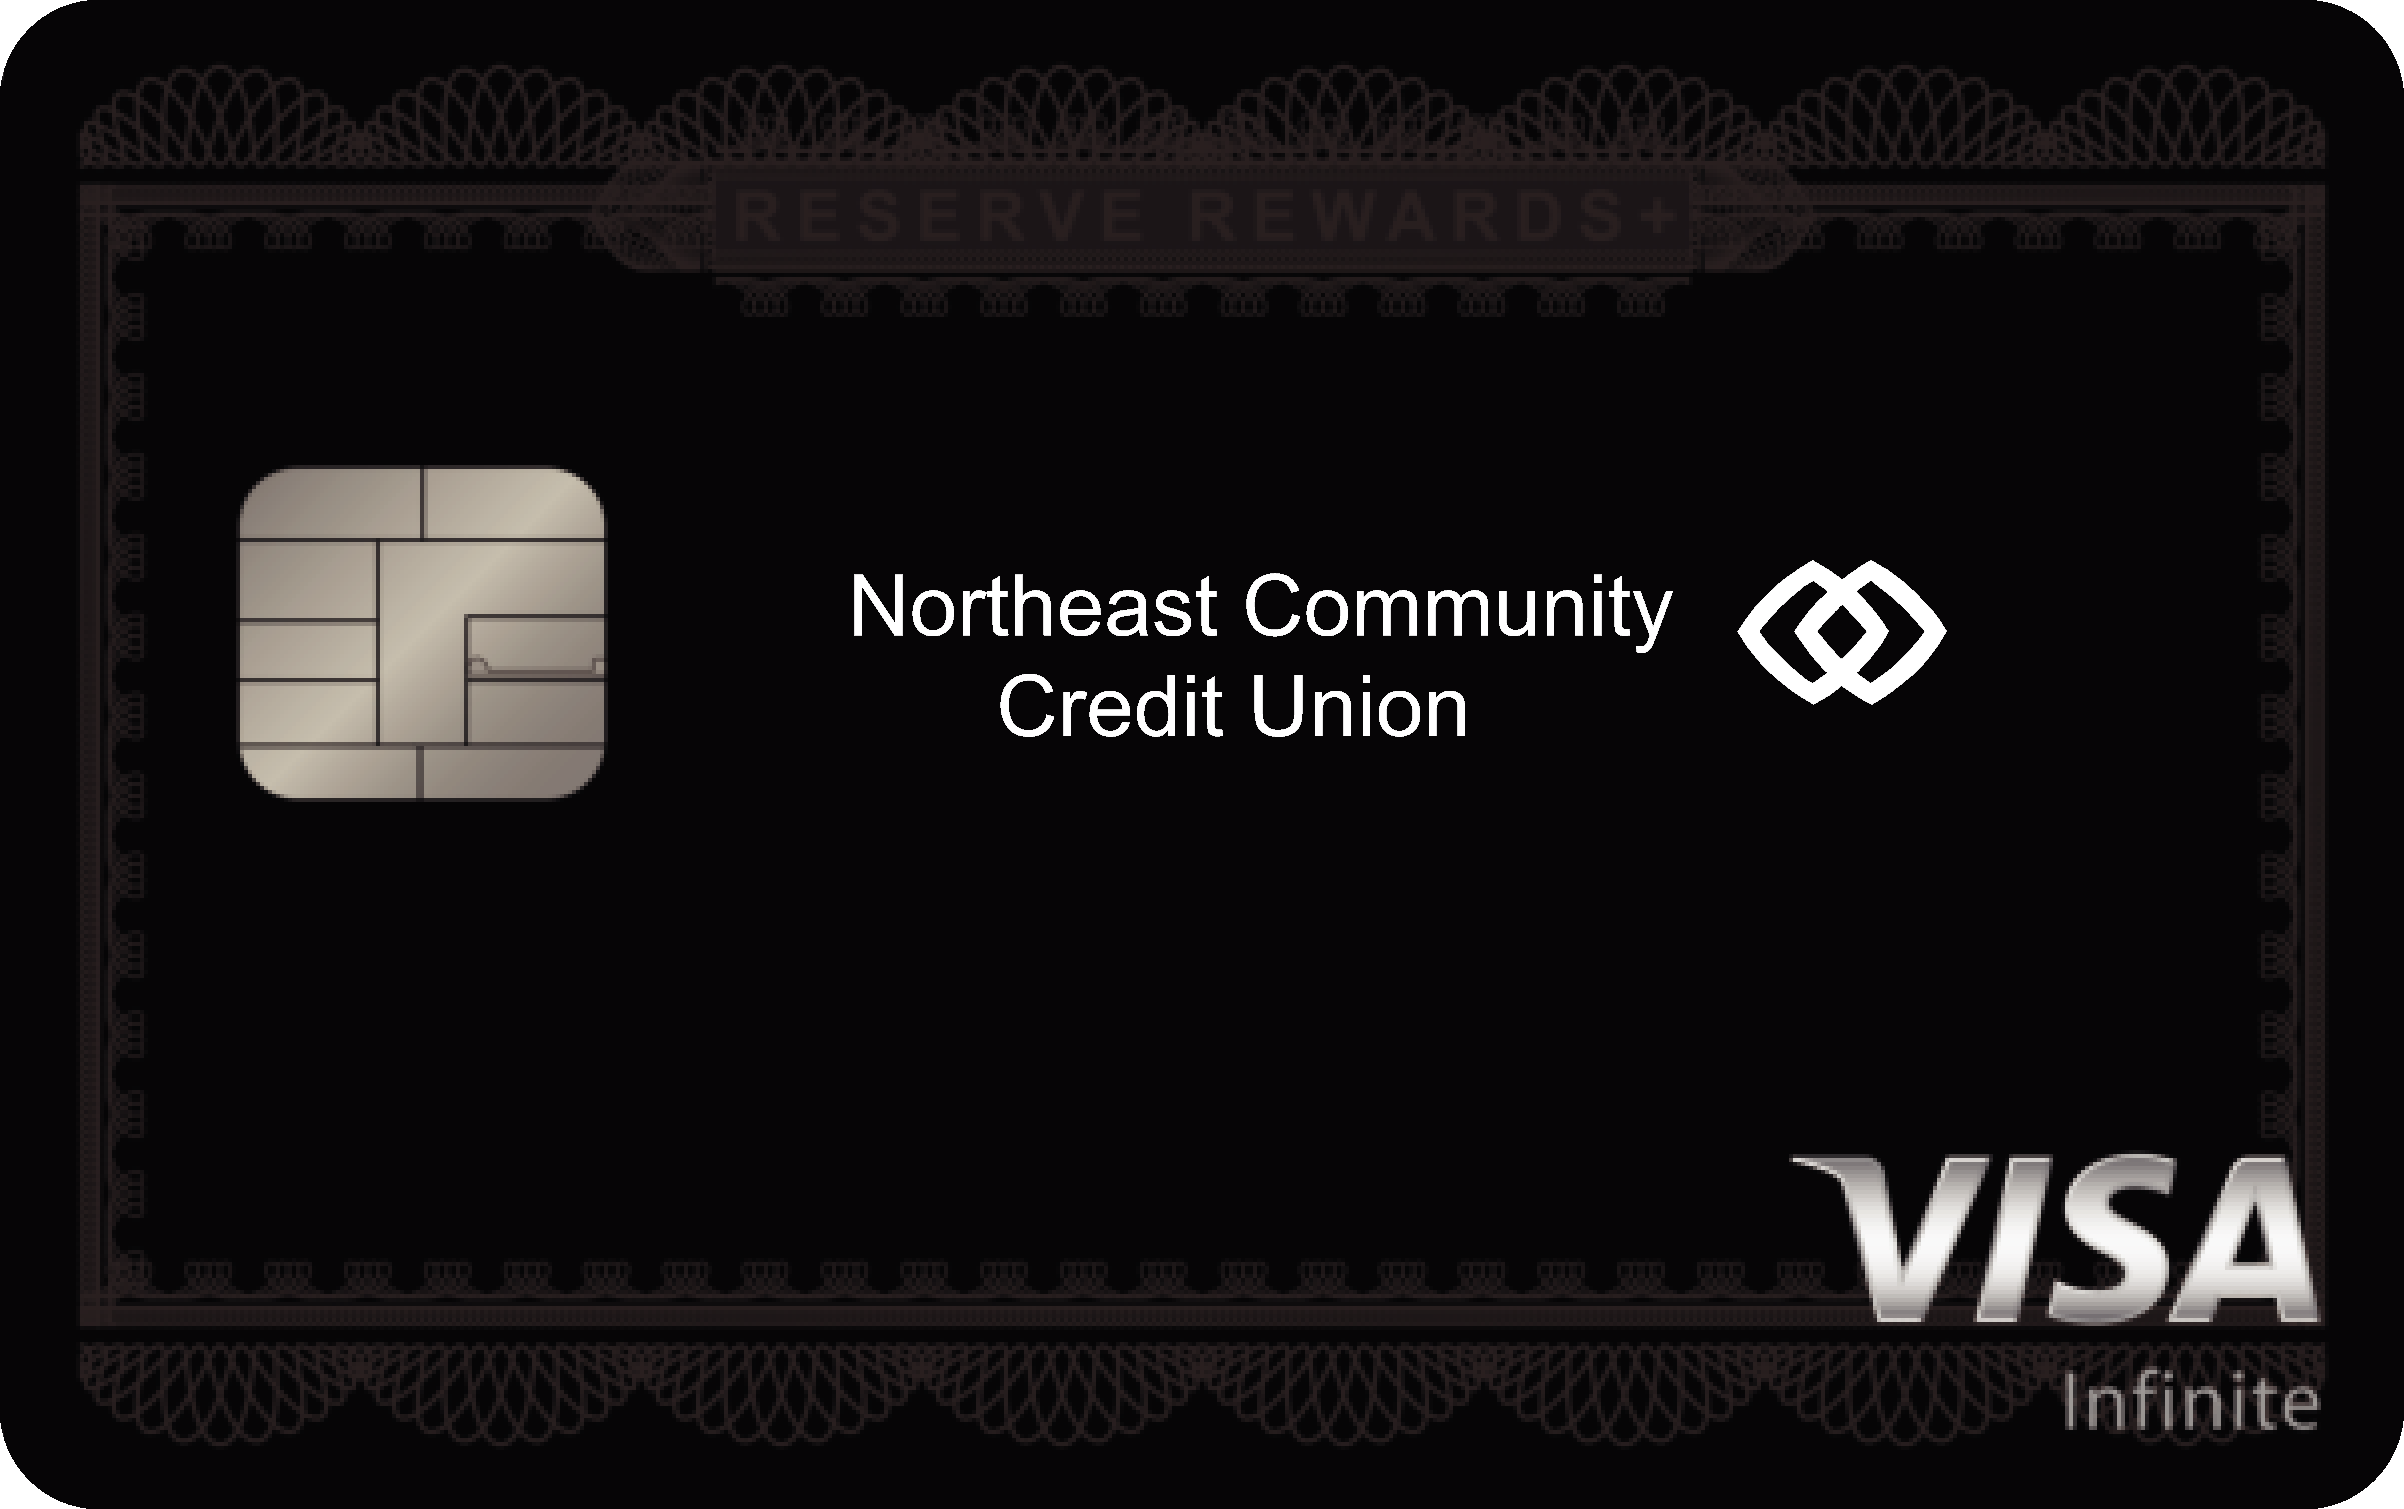 Northeast Community Credit Union